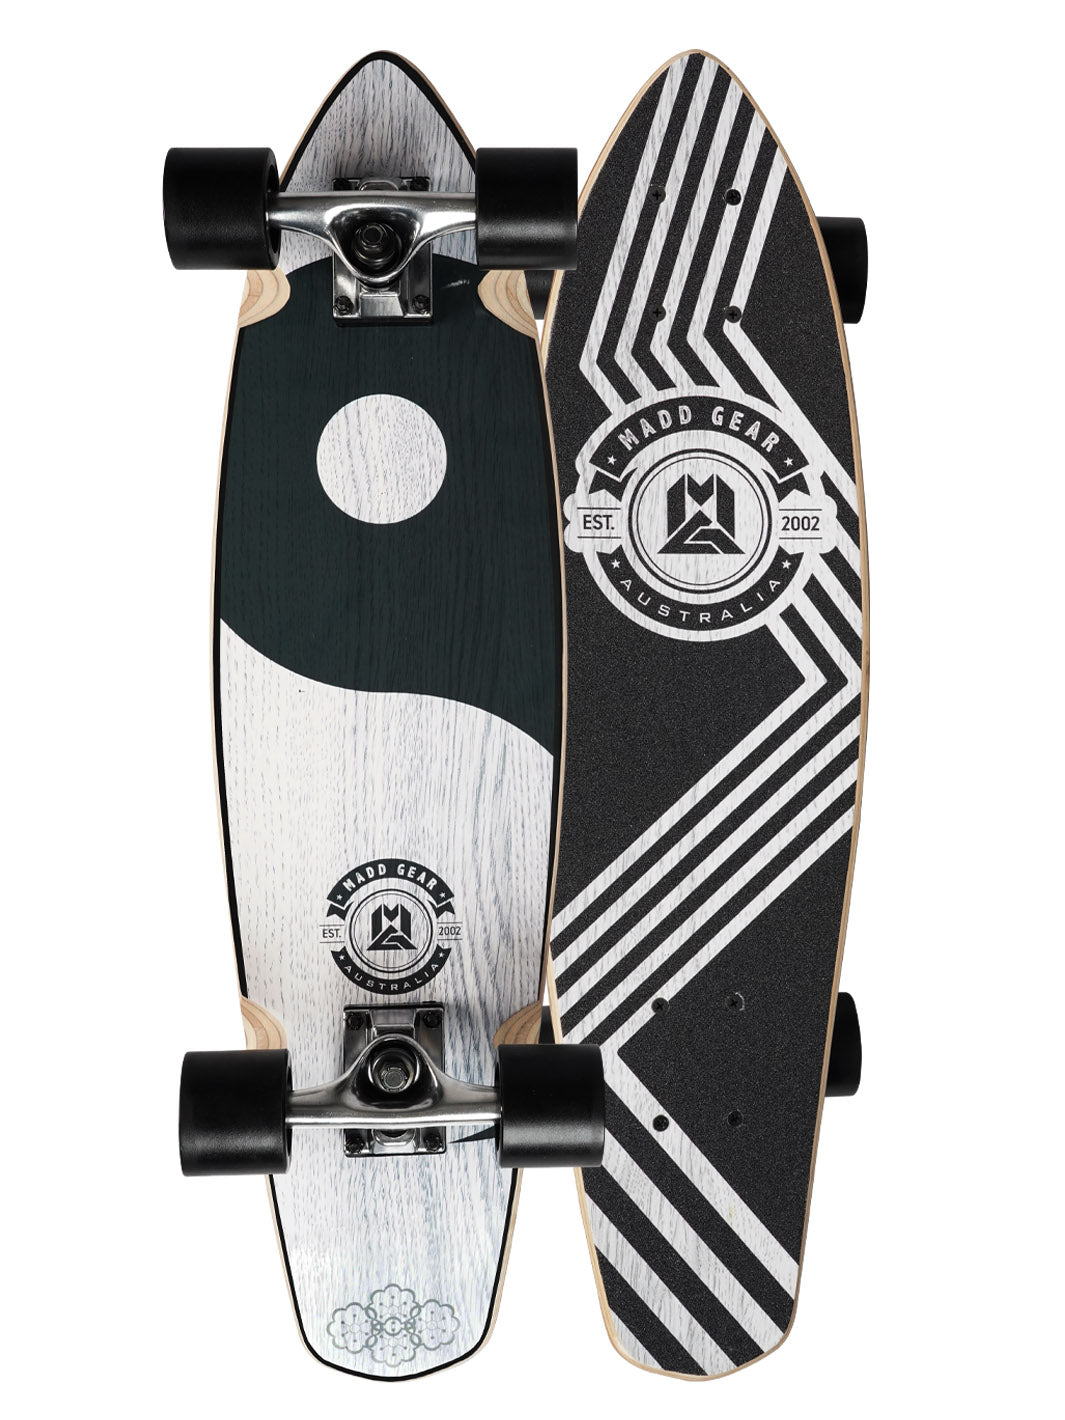 Madd Gear 28" Cruiser Board Skateboard Maple High Quality Aluminum Trucks Black White Light Weight Beginners